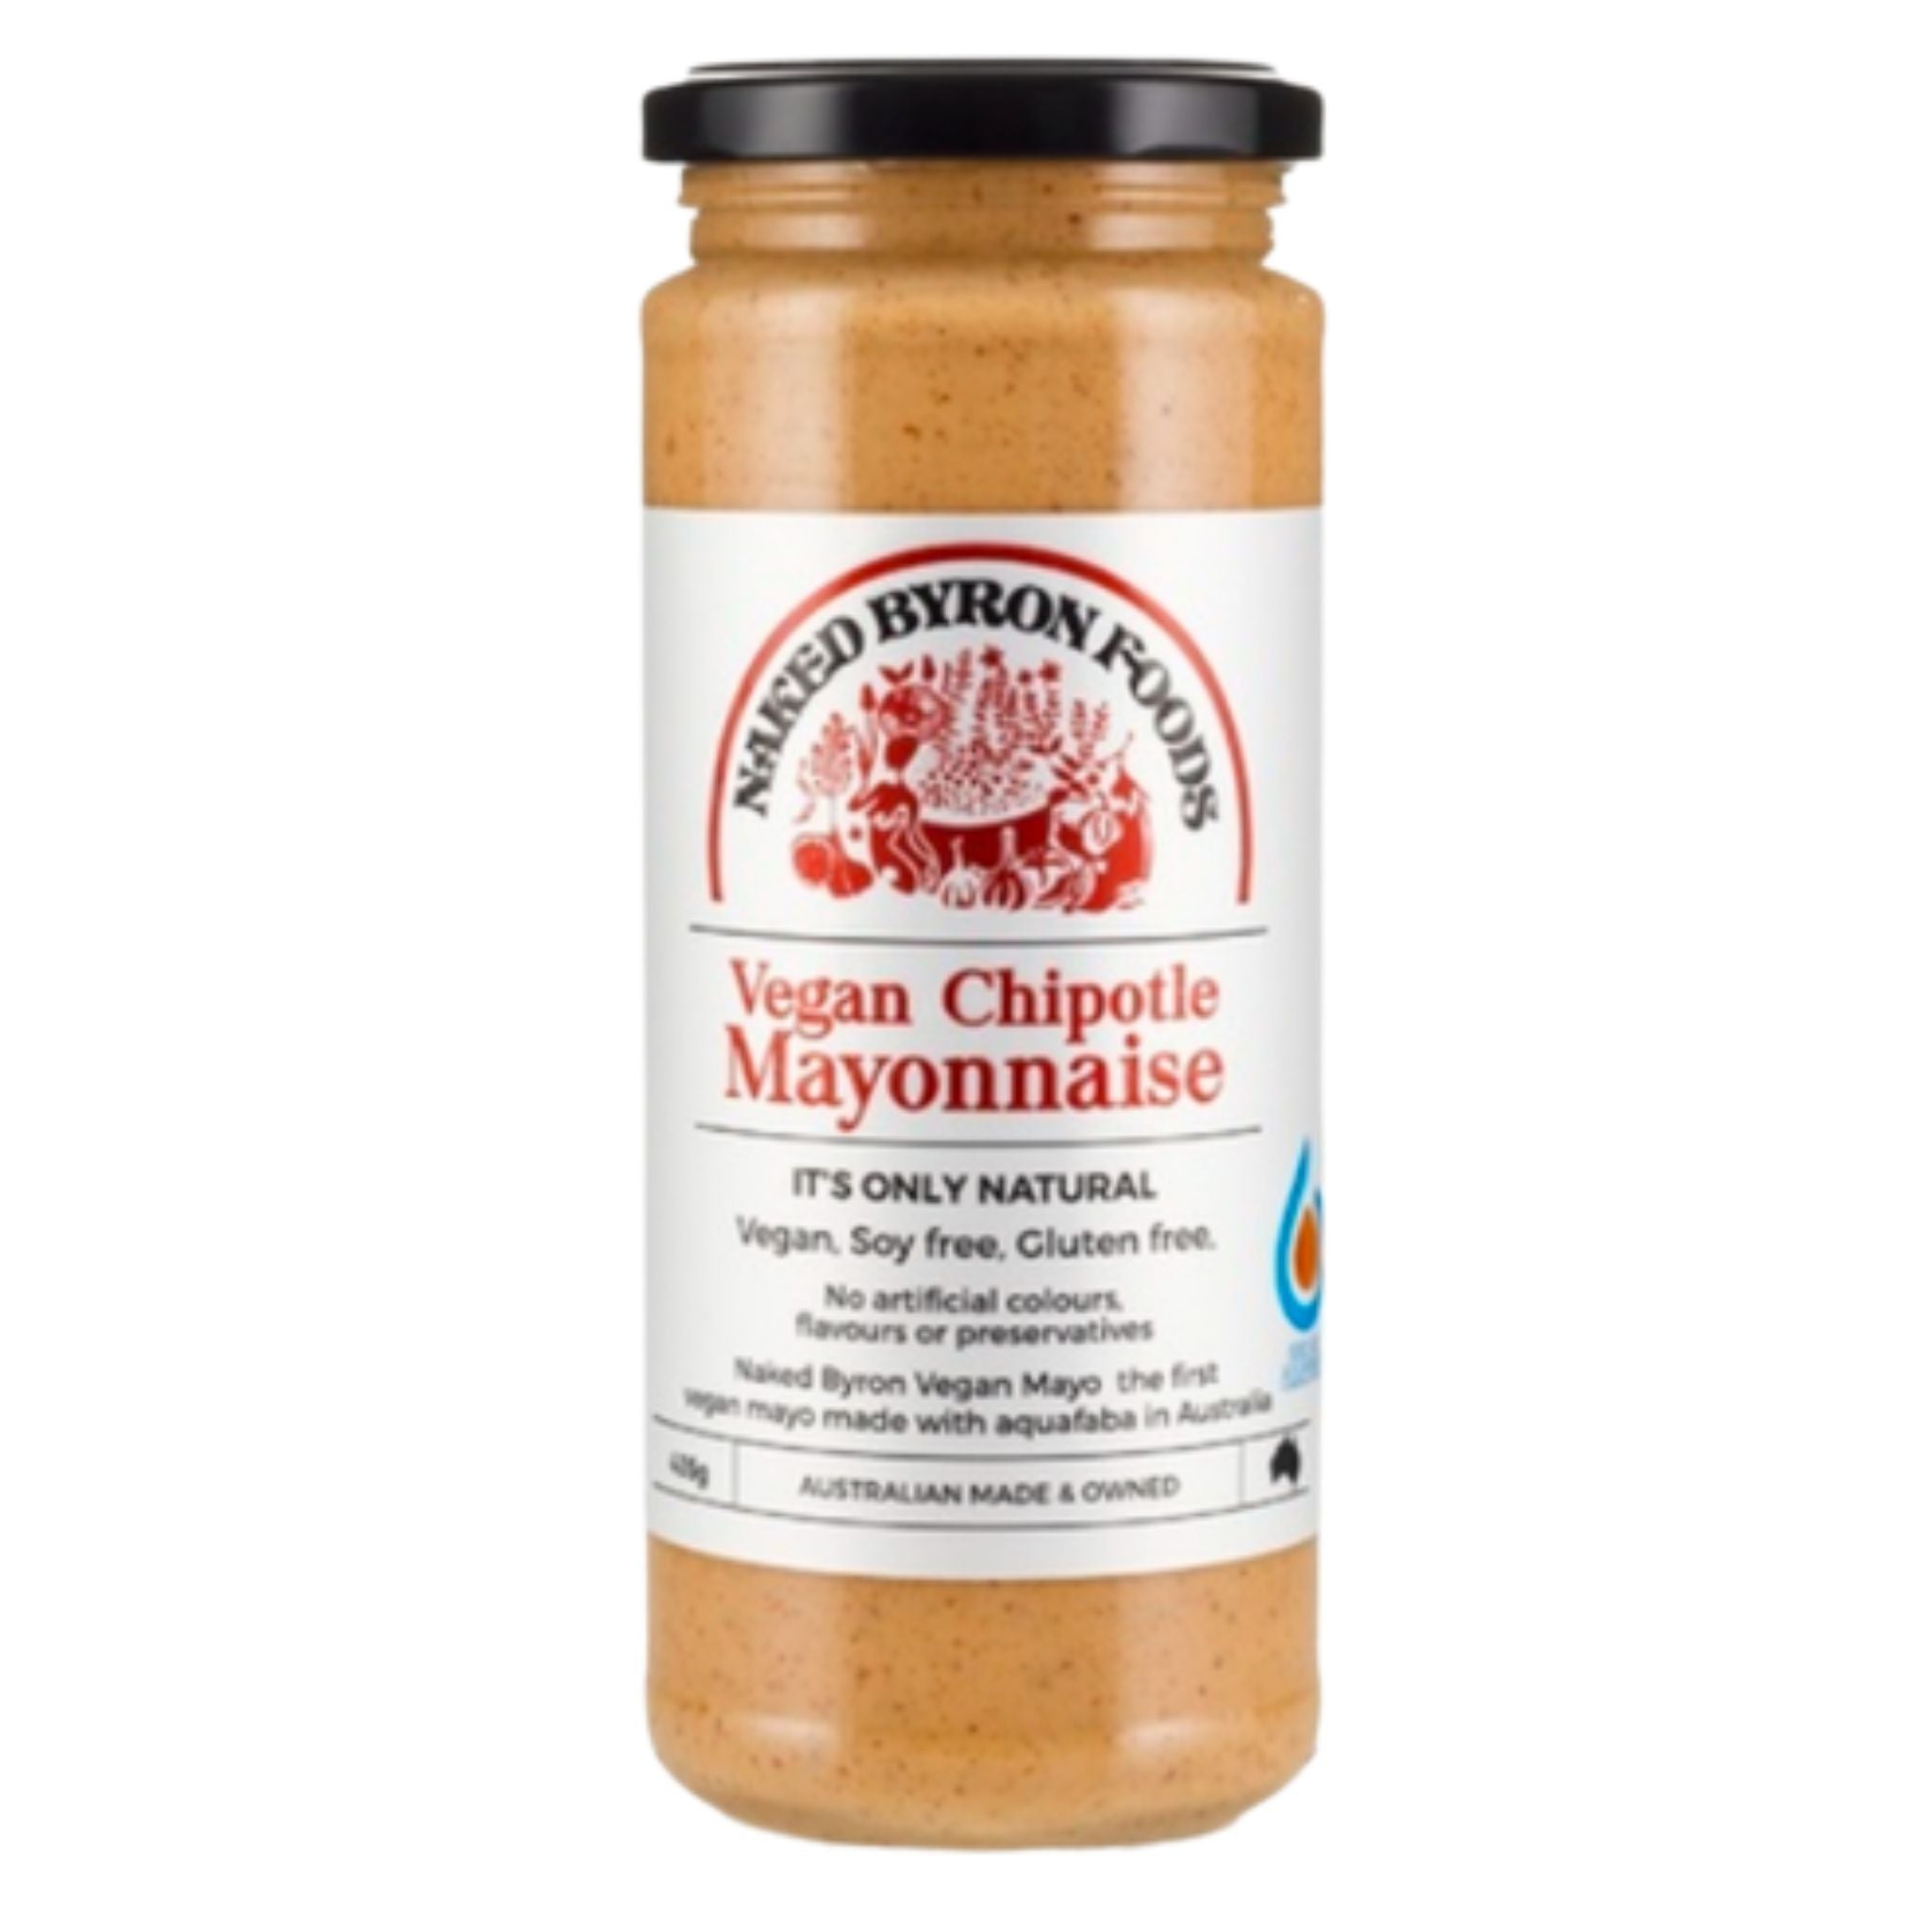 Vegan Chipotle Mayonnaise - Naked Byron Foods. 435g